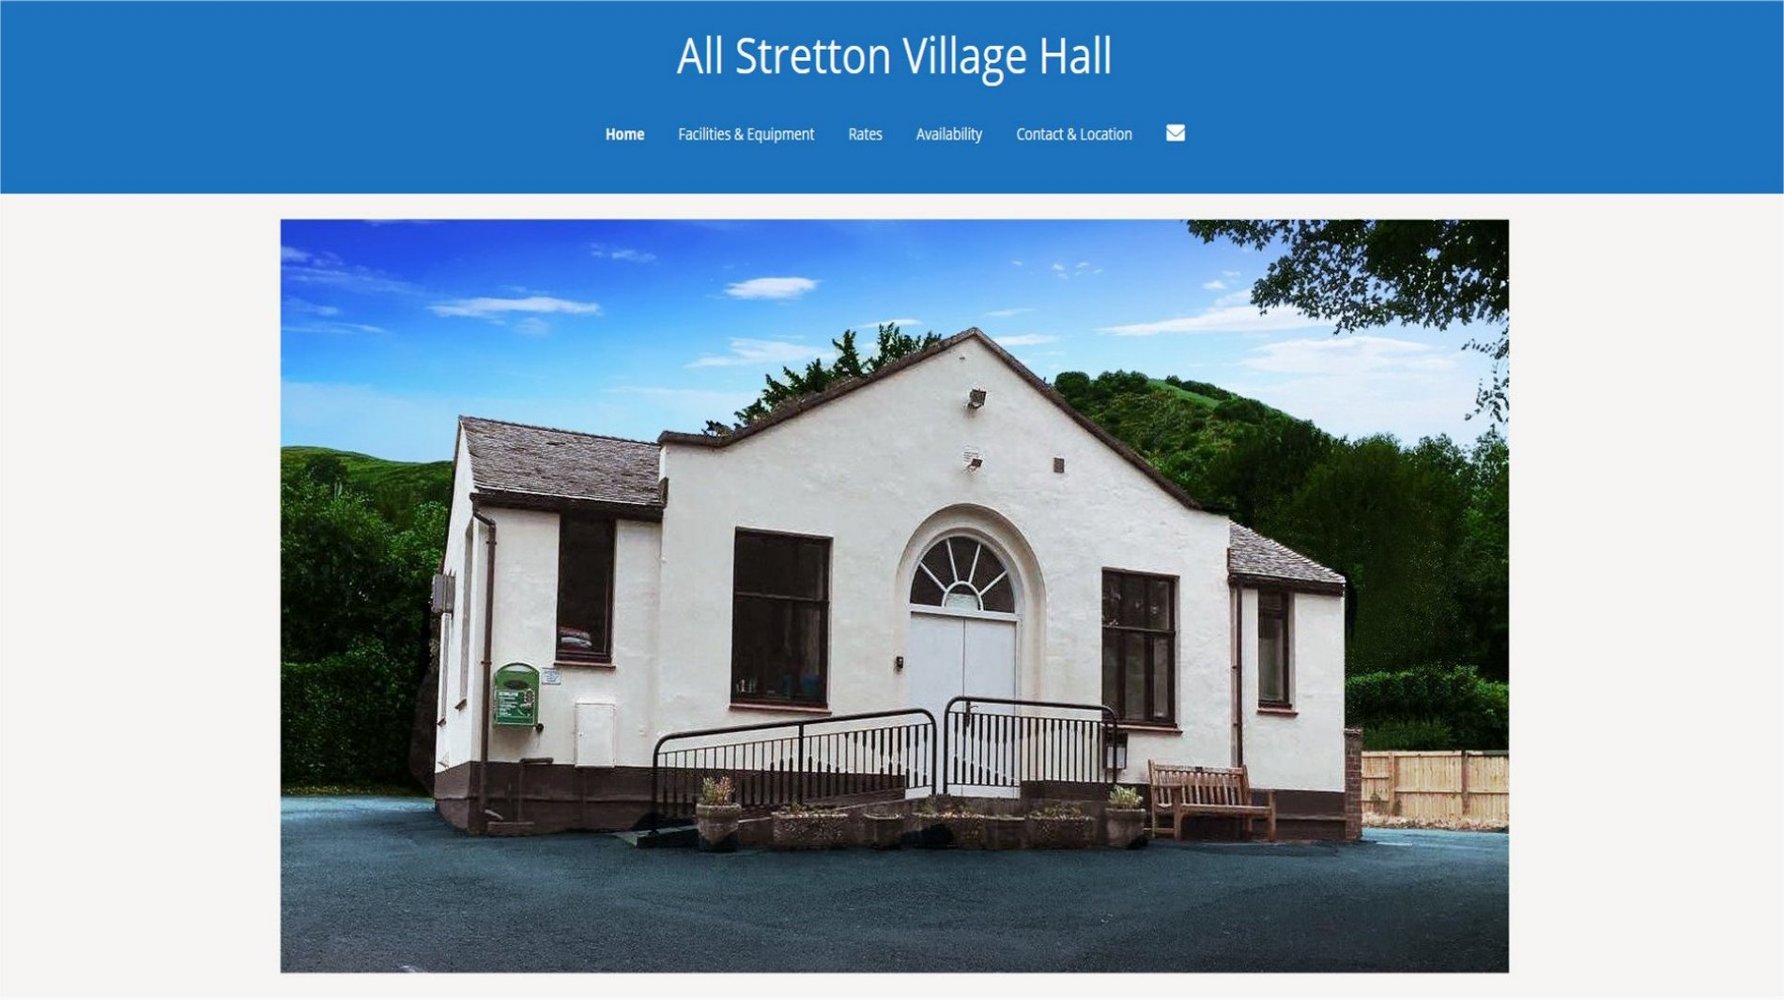 All Stretton Village Hall, Shropshire